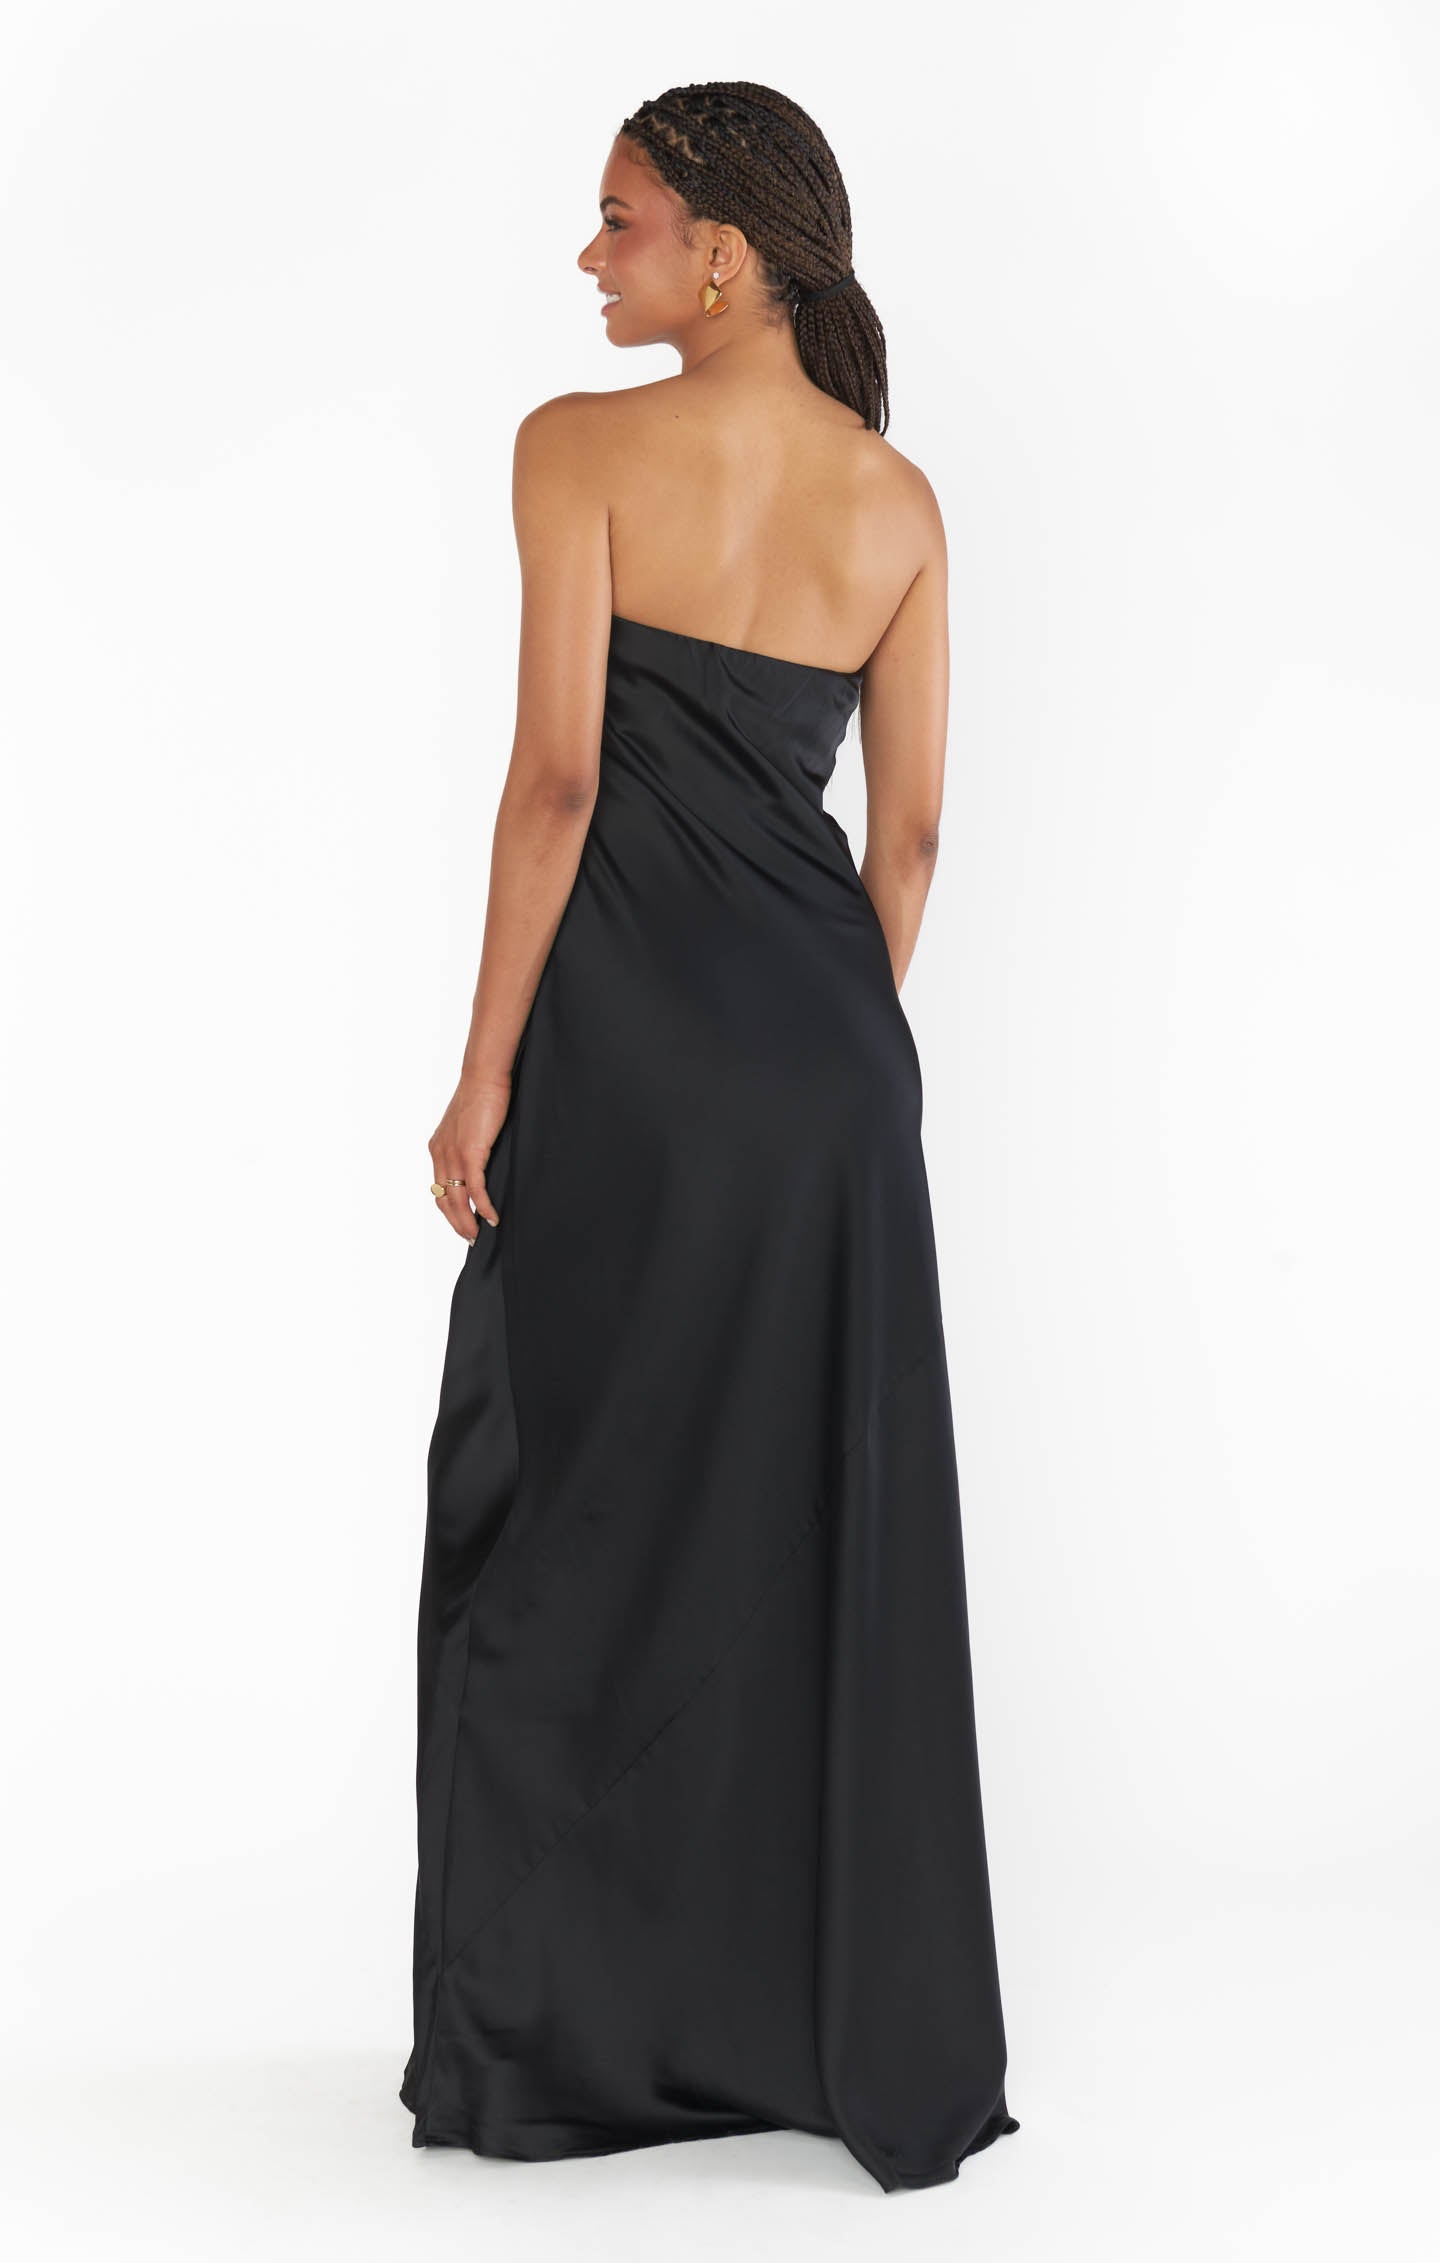 black satin strapless dress